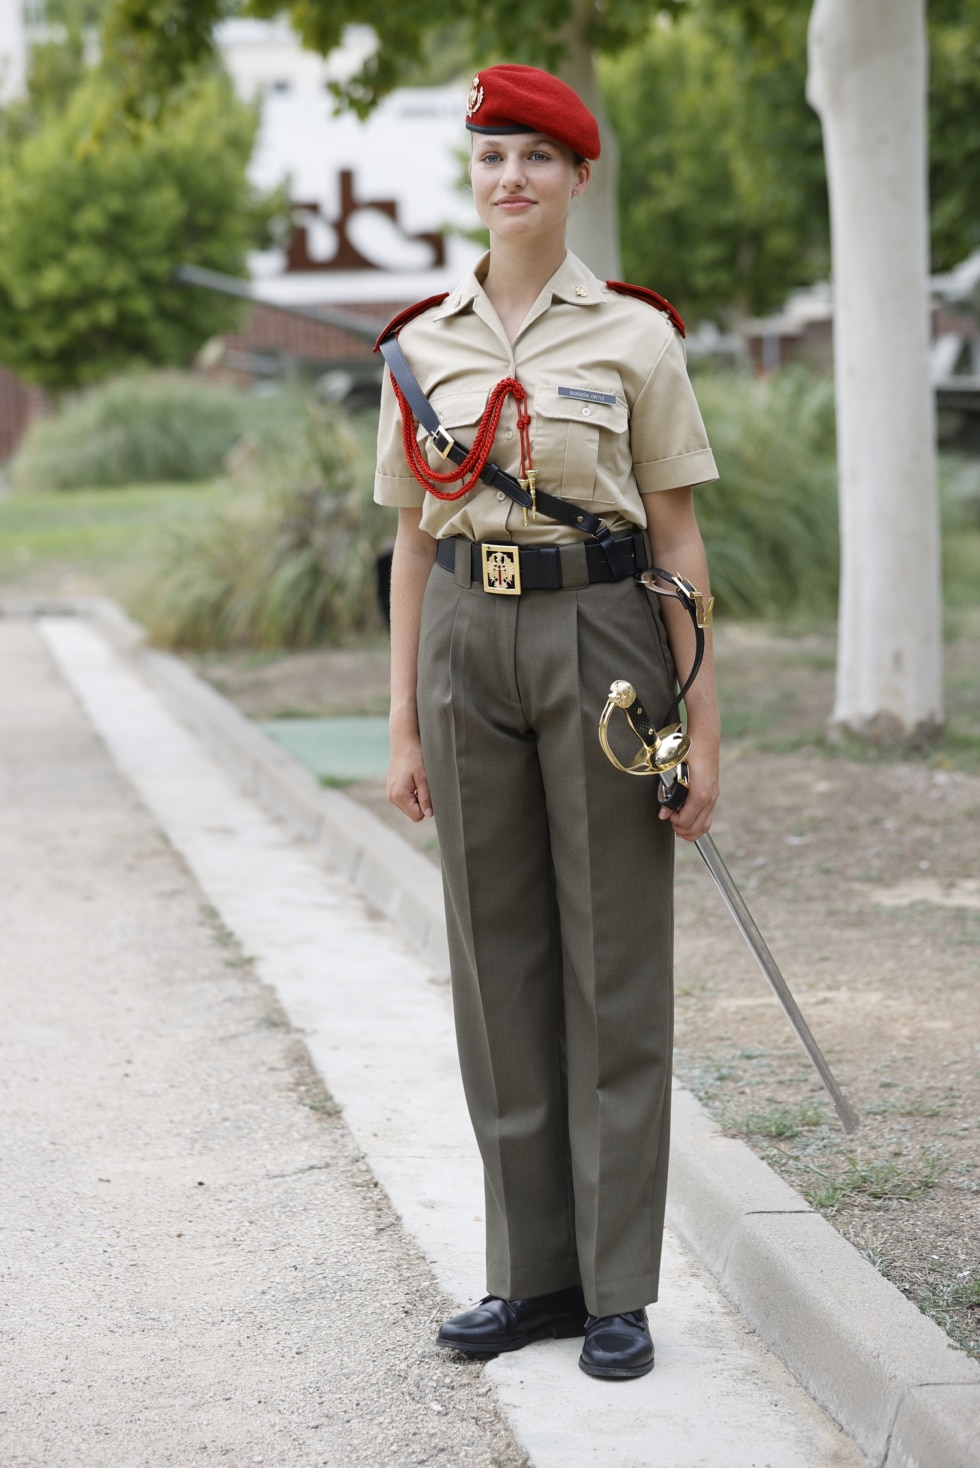 Princess Leonor in full uniform, including saber, after her cadet status ceremony.